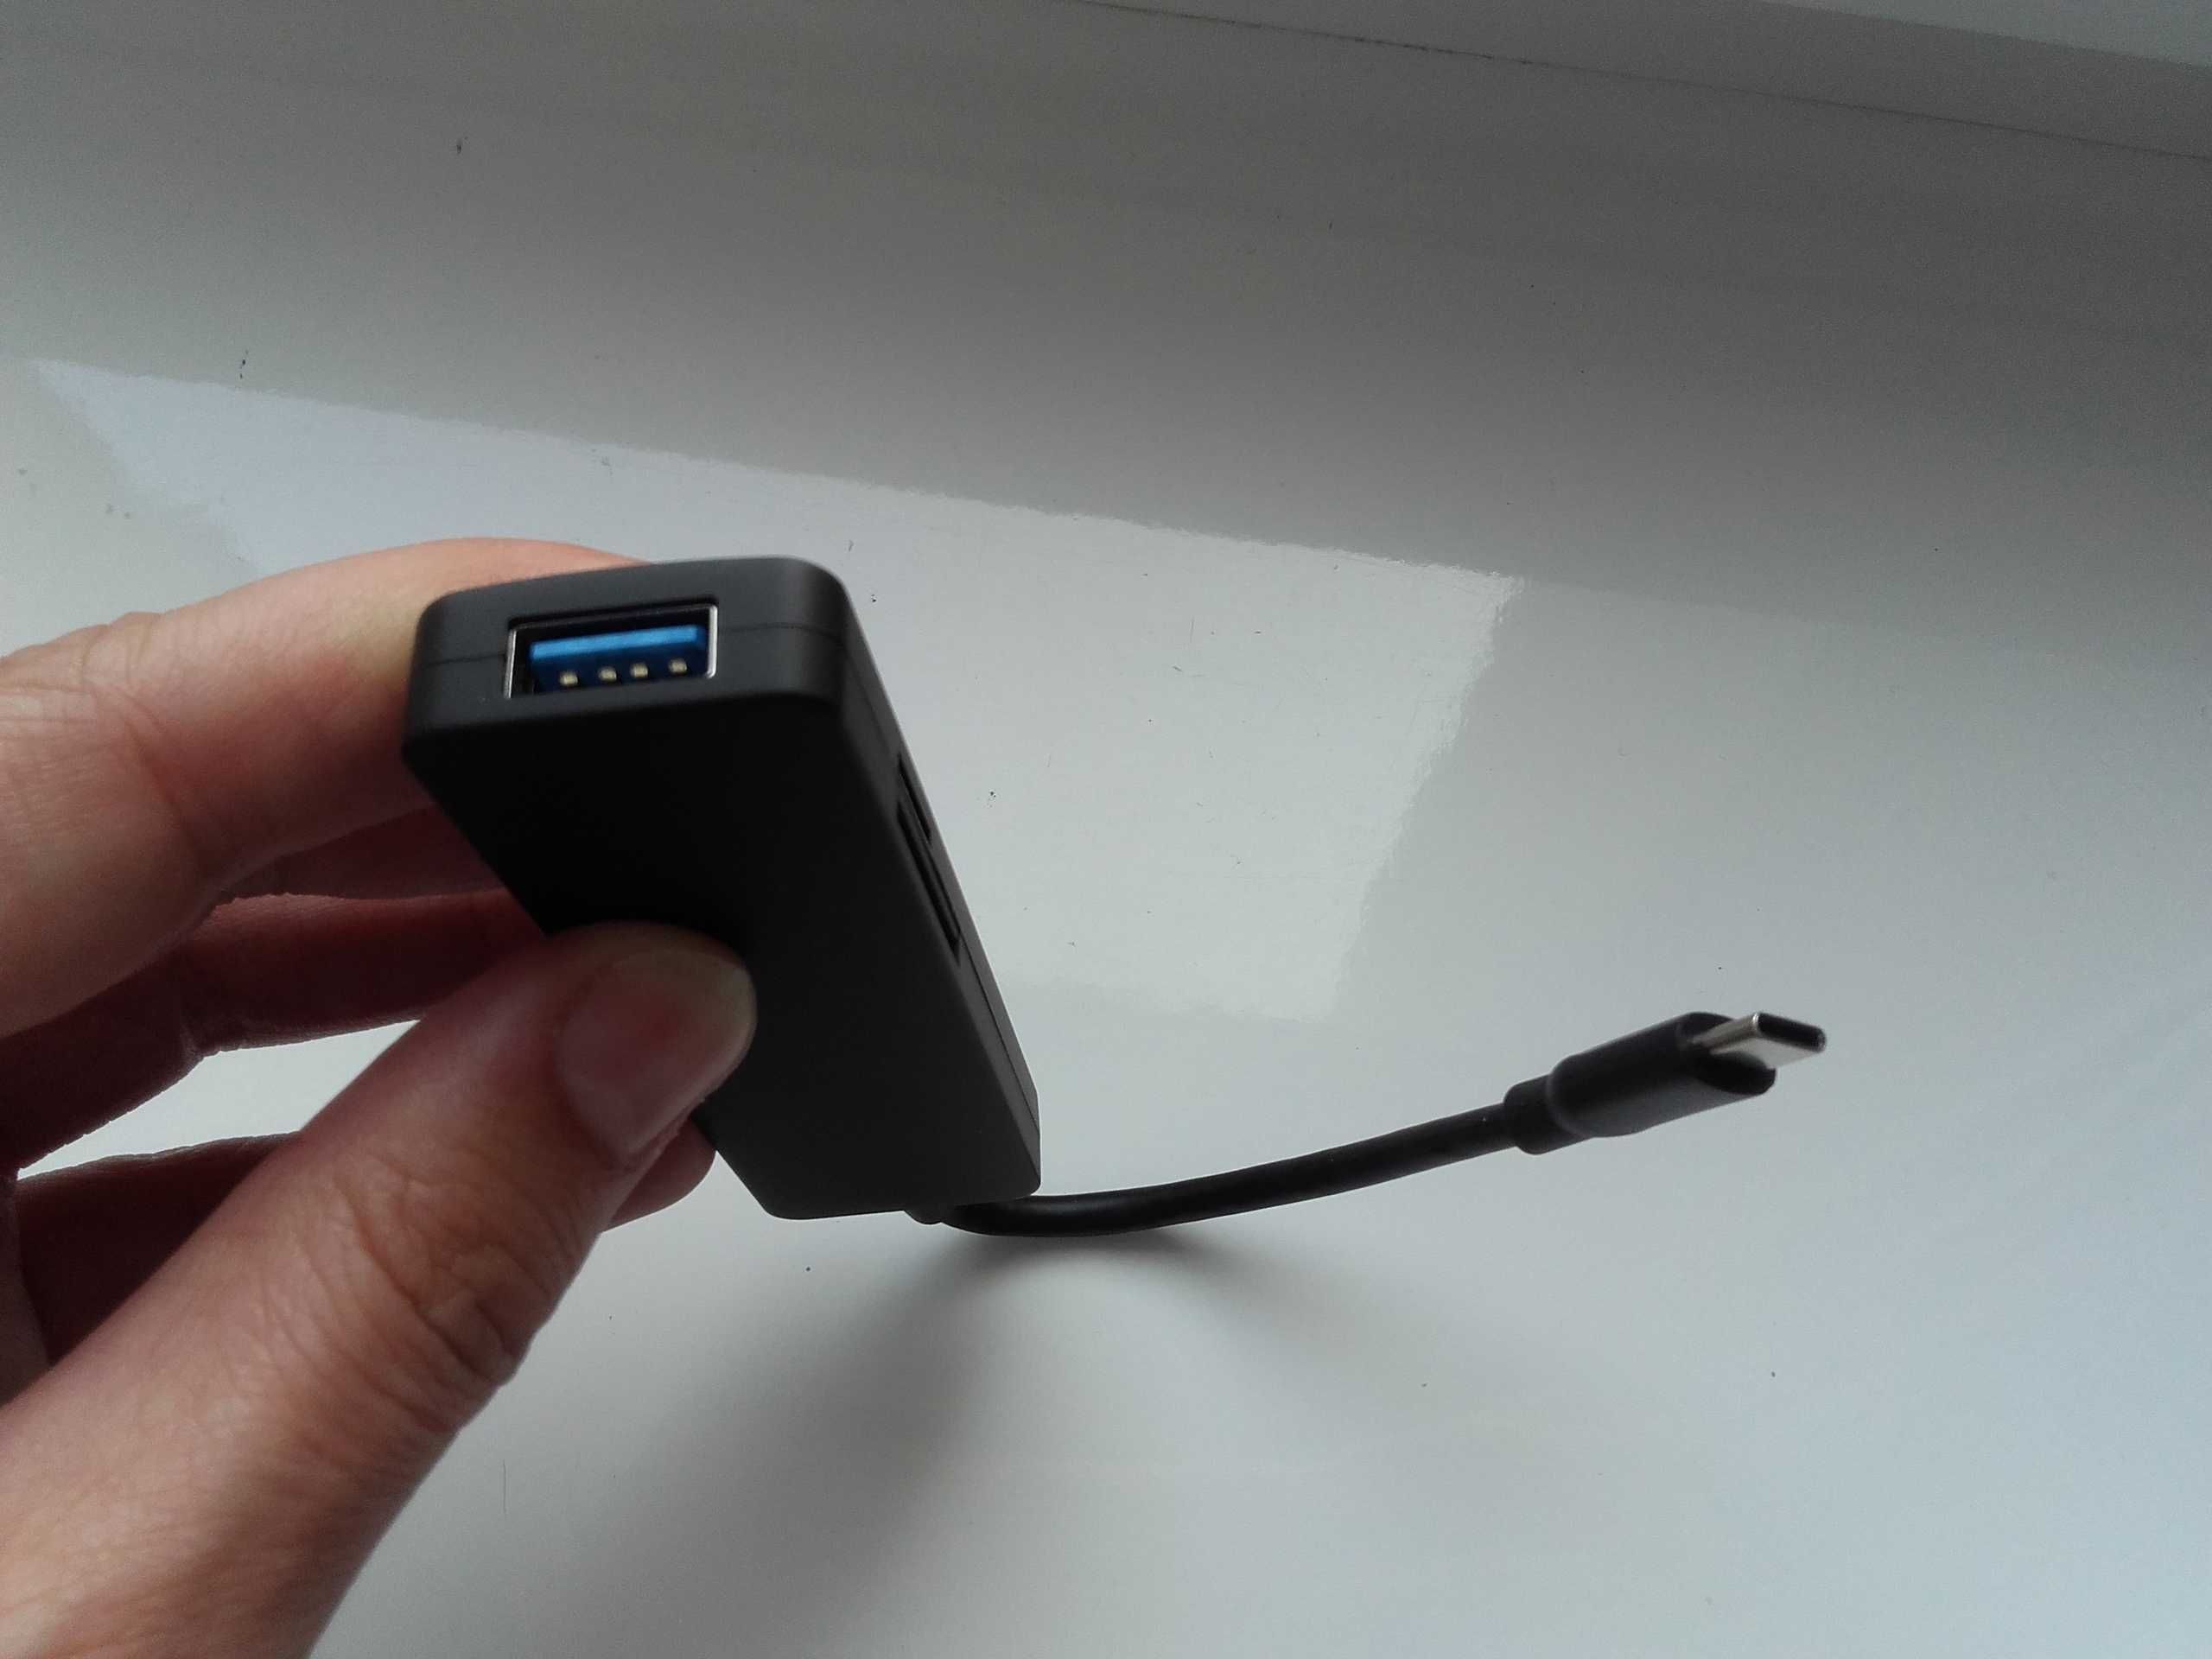 HUB USB-C, 3.0, 2.0, microSD